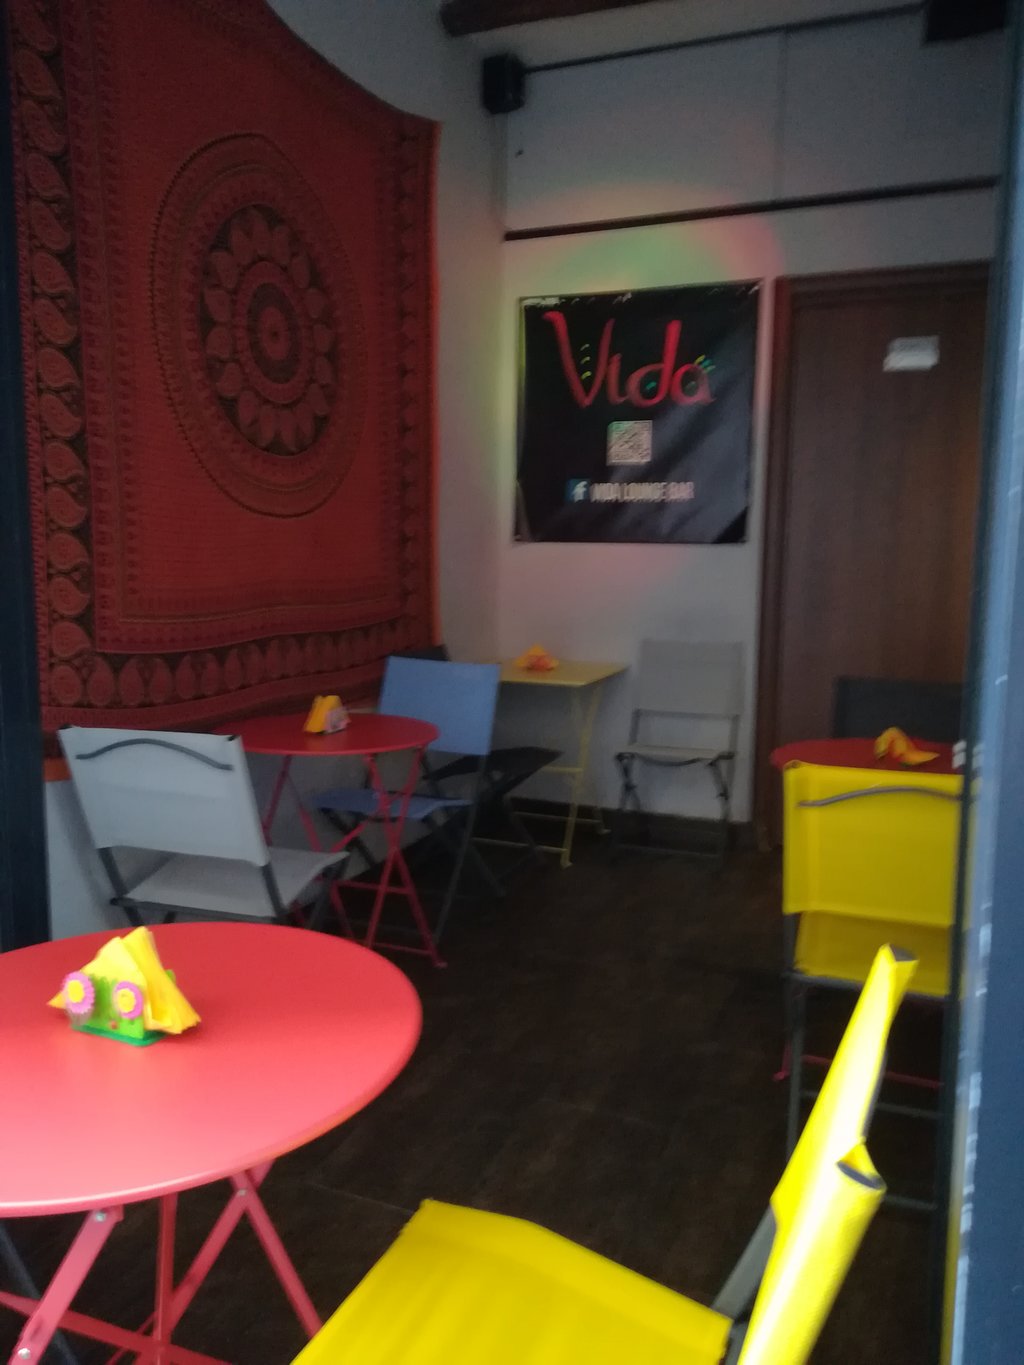 Vida - Lounge Bar